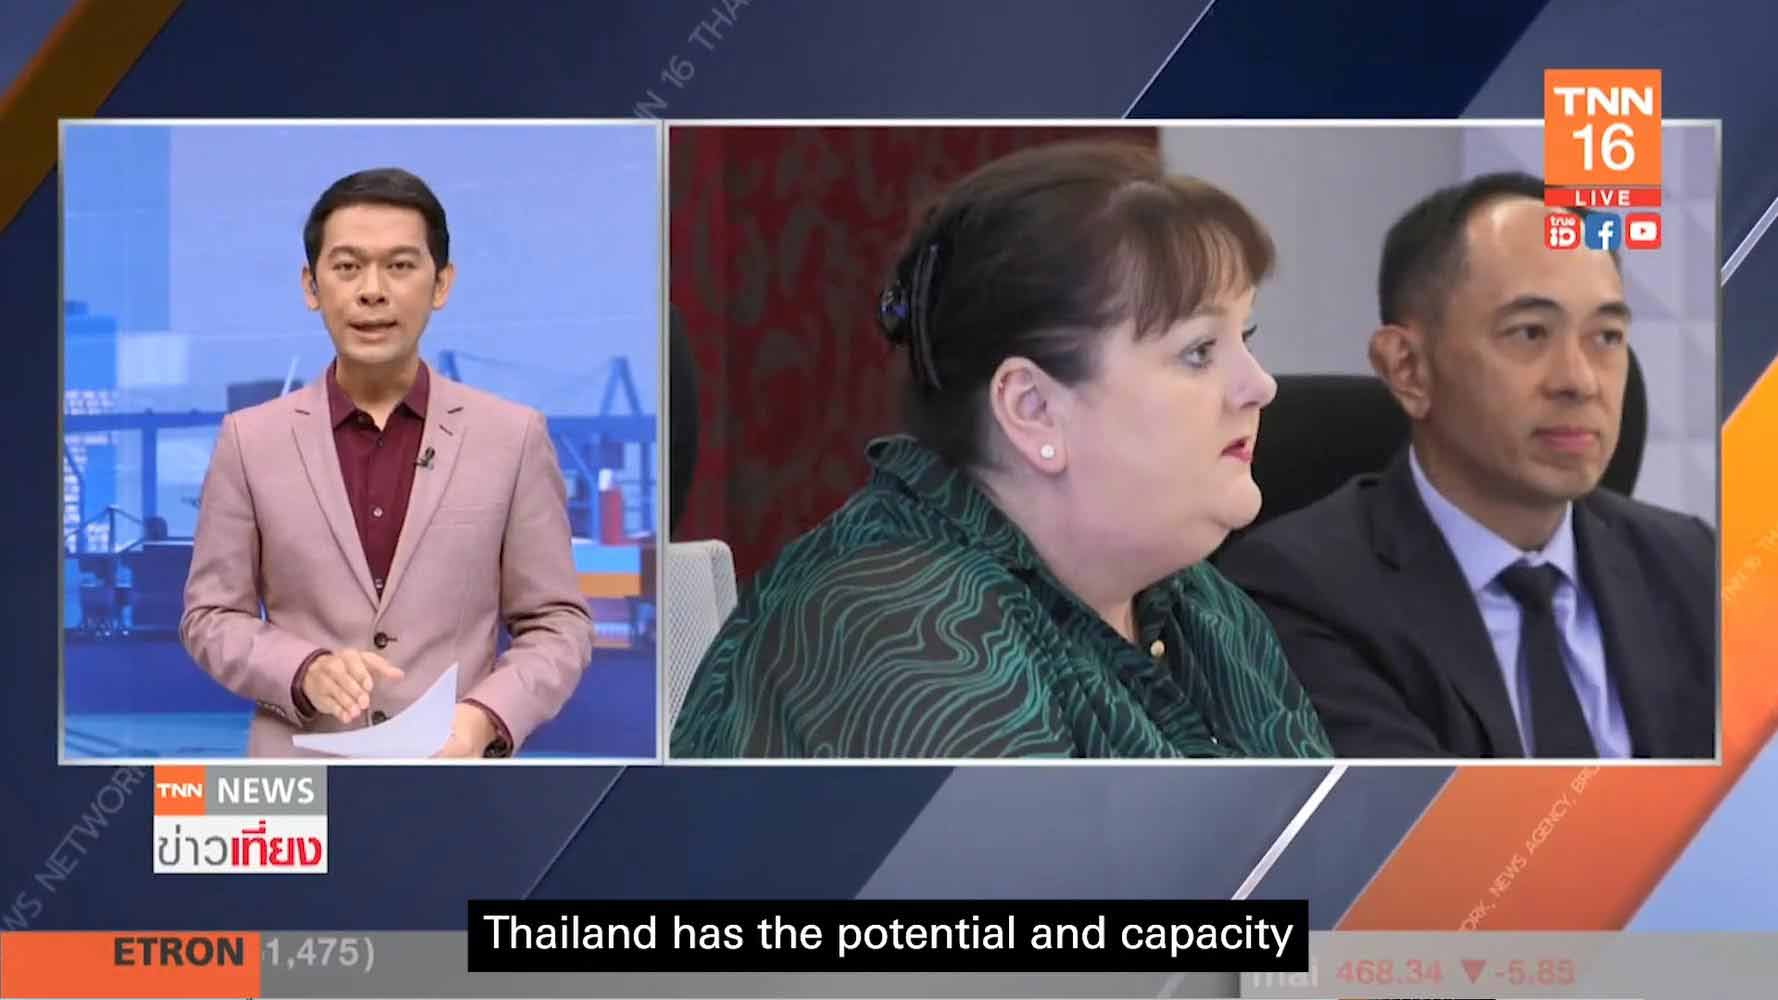 Opportunities in Thailand